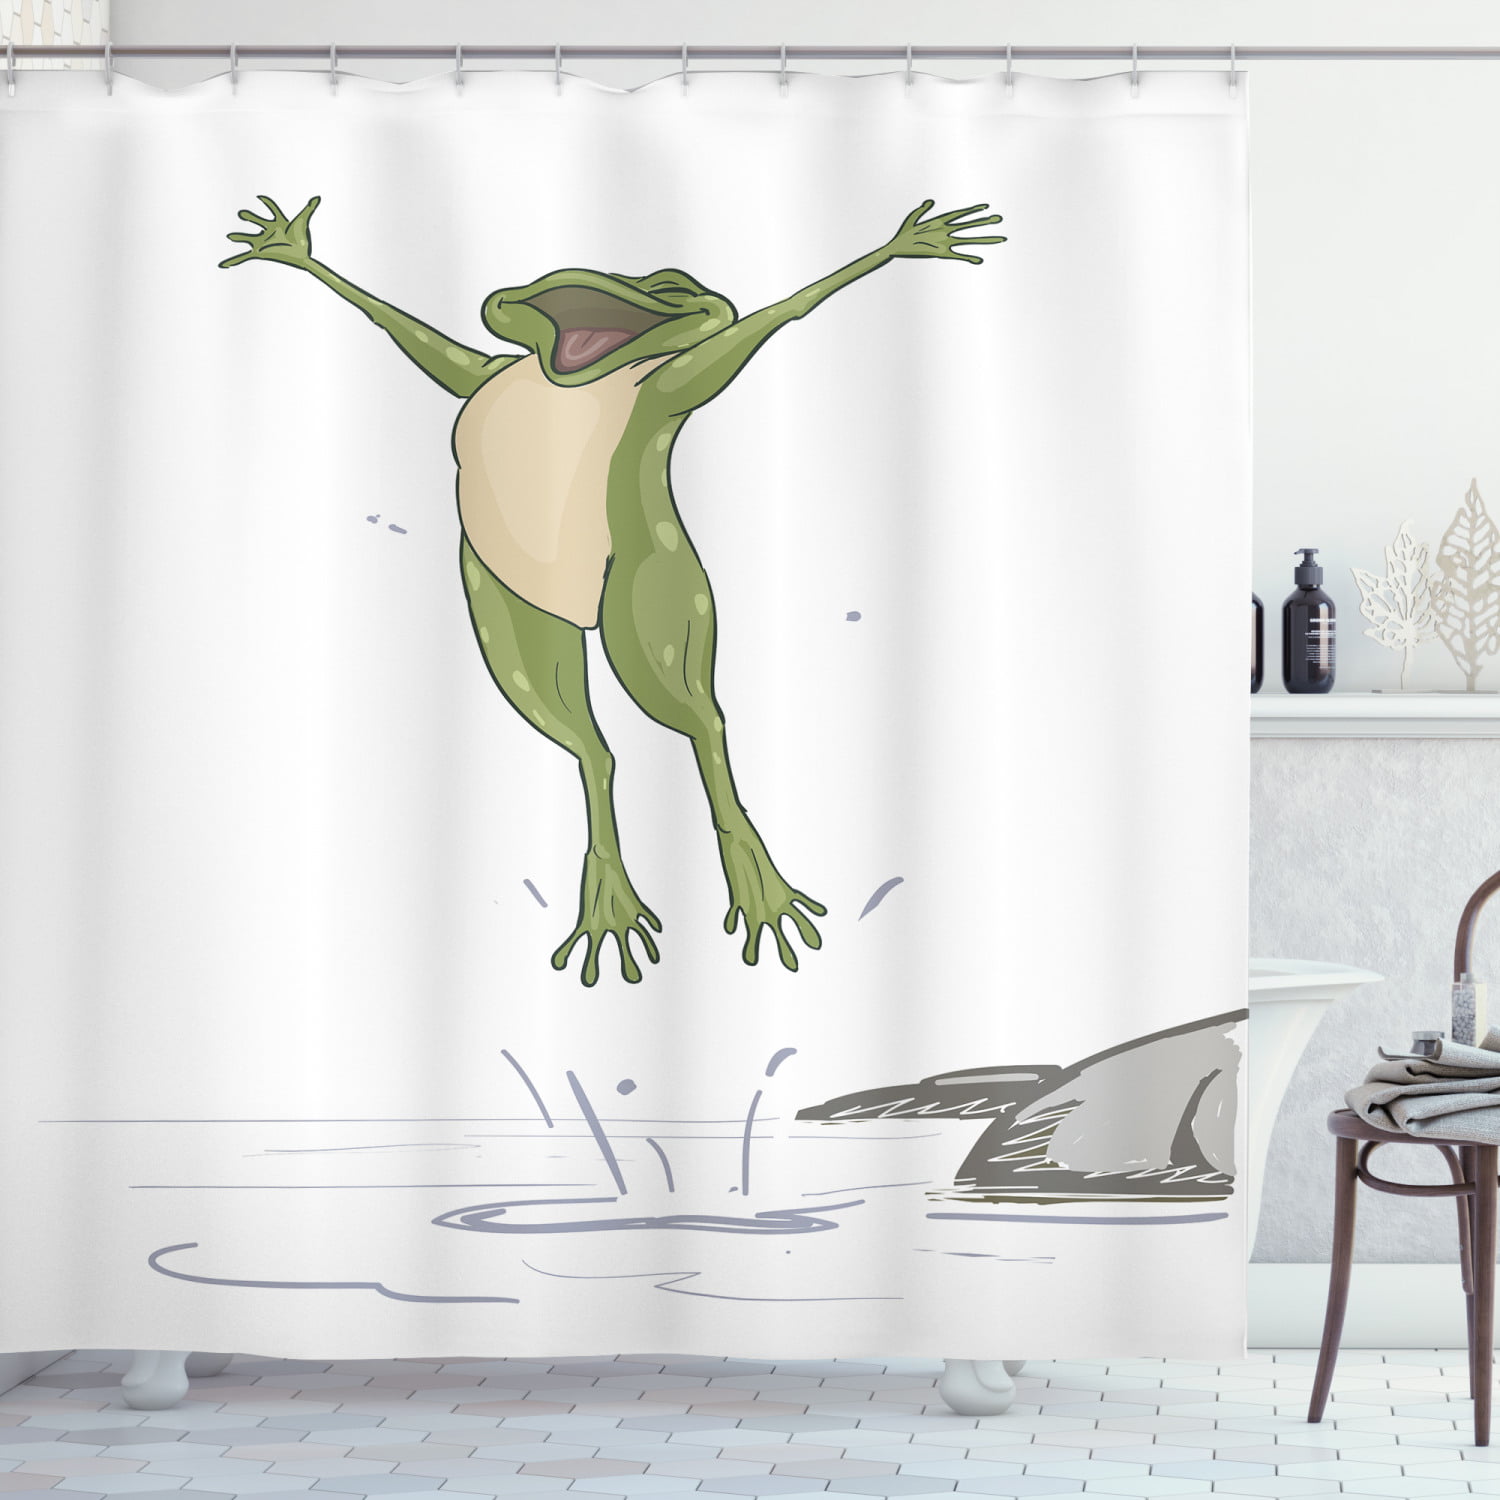 Watercolor Lotus Frog Shower Curtain Liner Bathroom Decor w/ Hooks Mat 72"x72" 